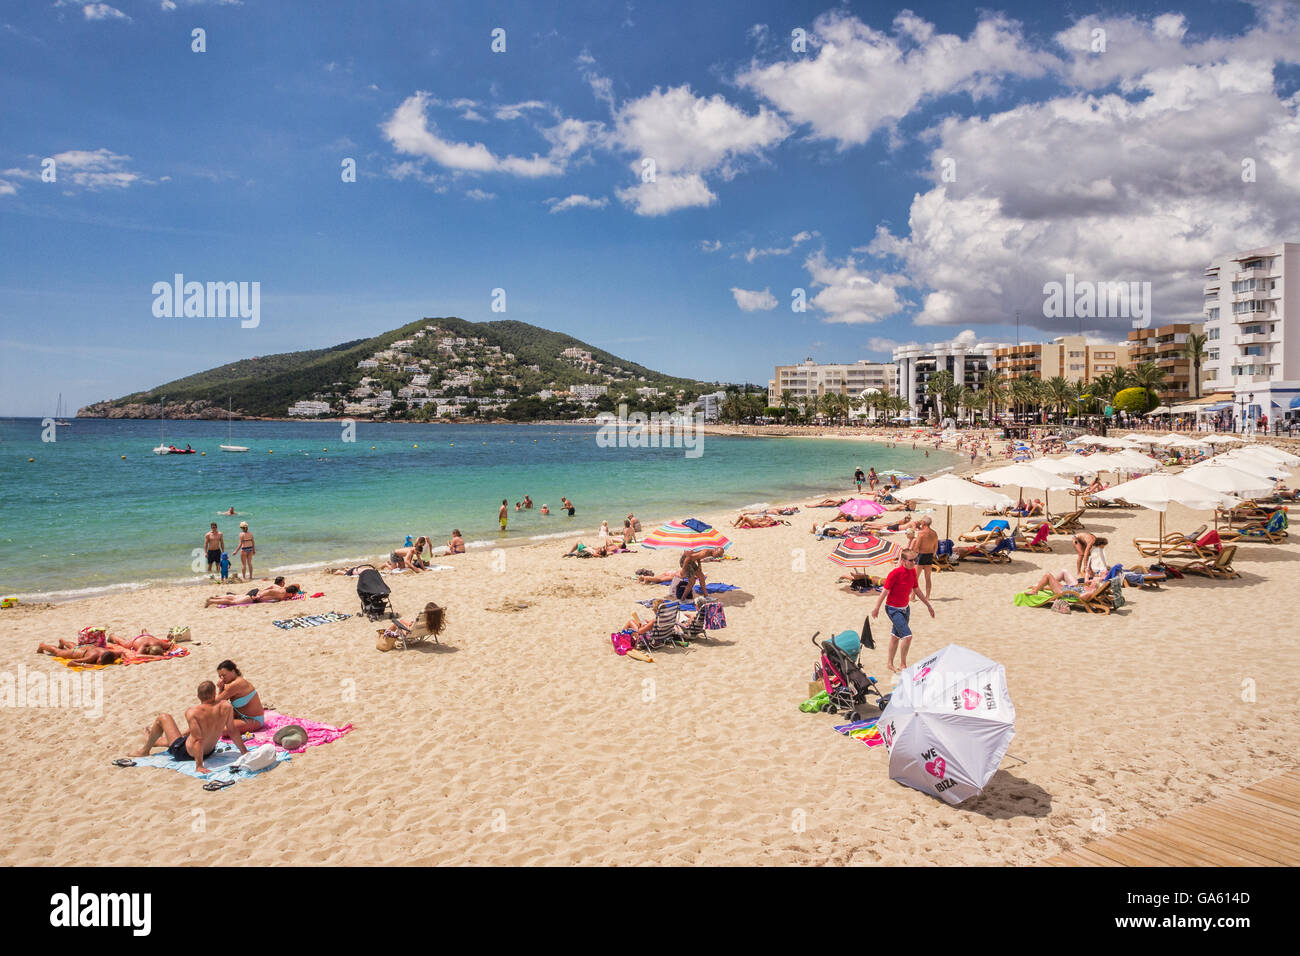 20 June 2016: Santa Eularia, Ibiza, Spain - The beach at Santa Eularia, Ibiza, Spain. Stock Photo